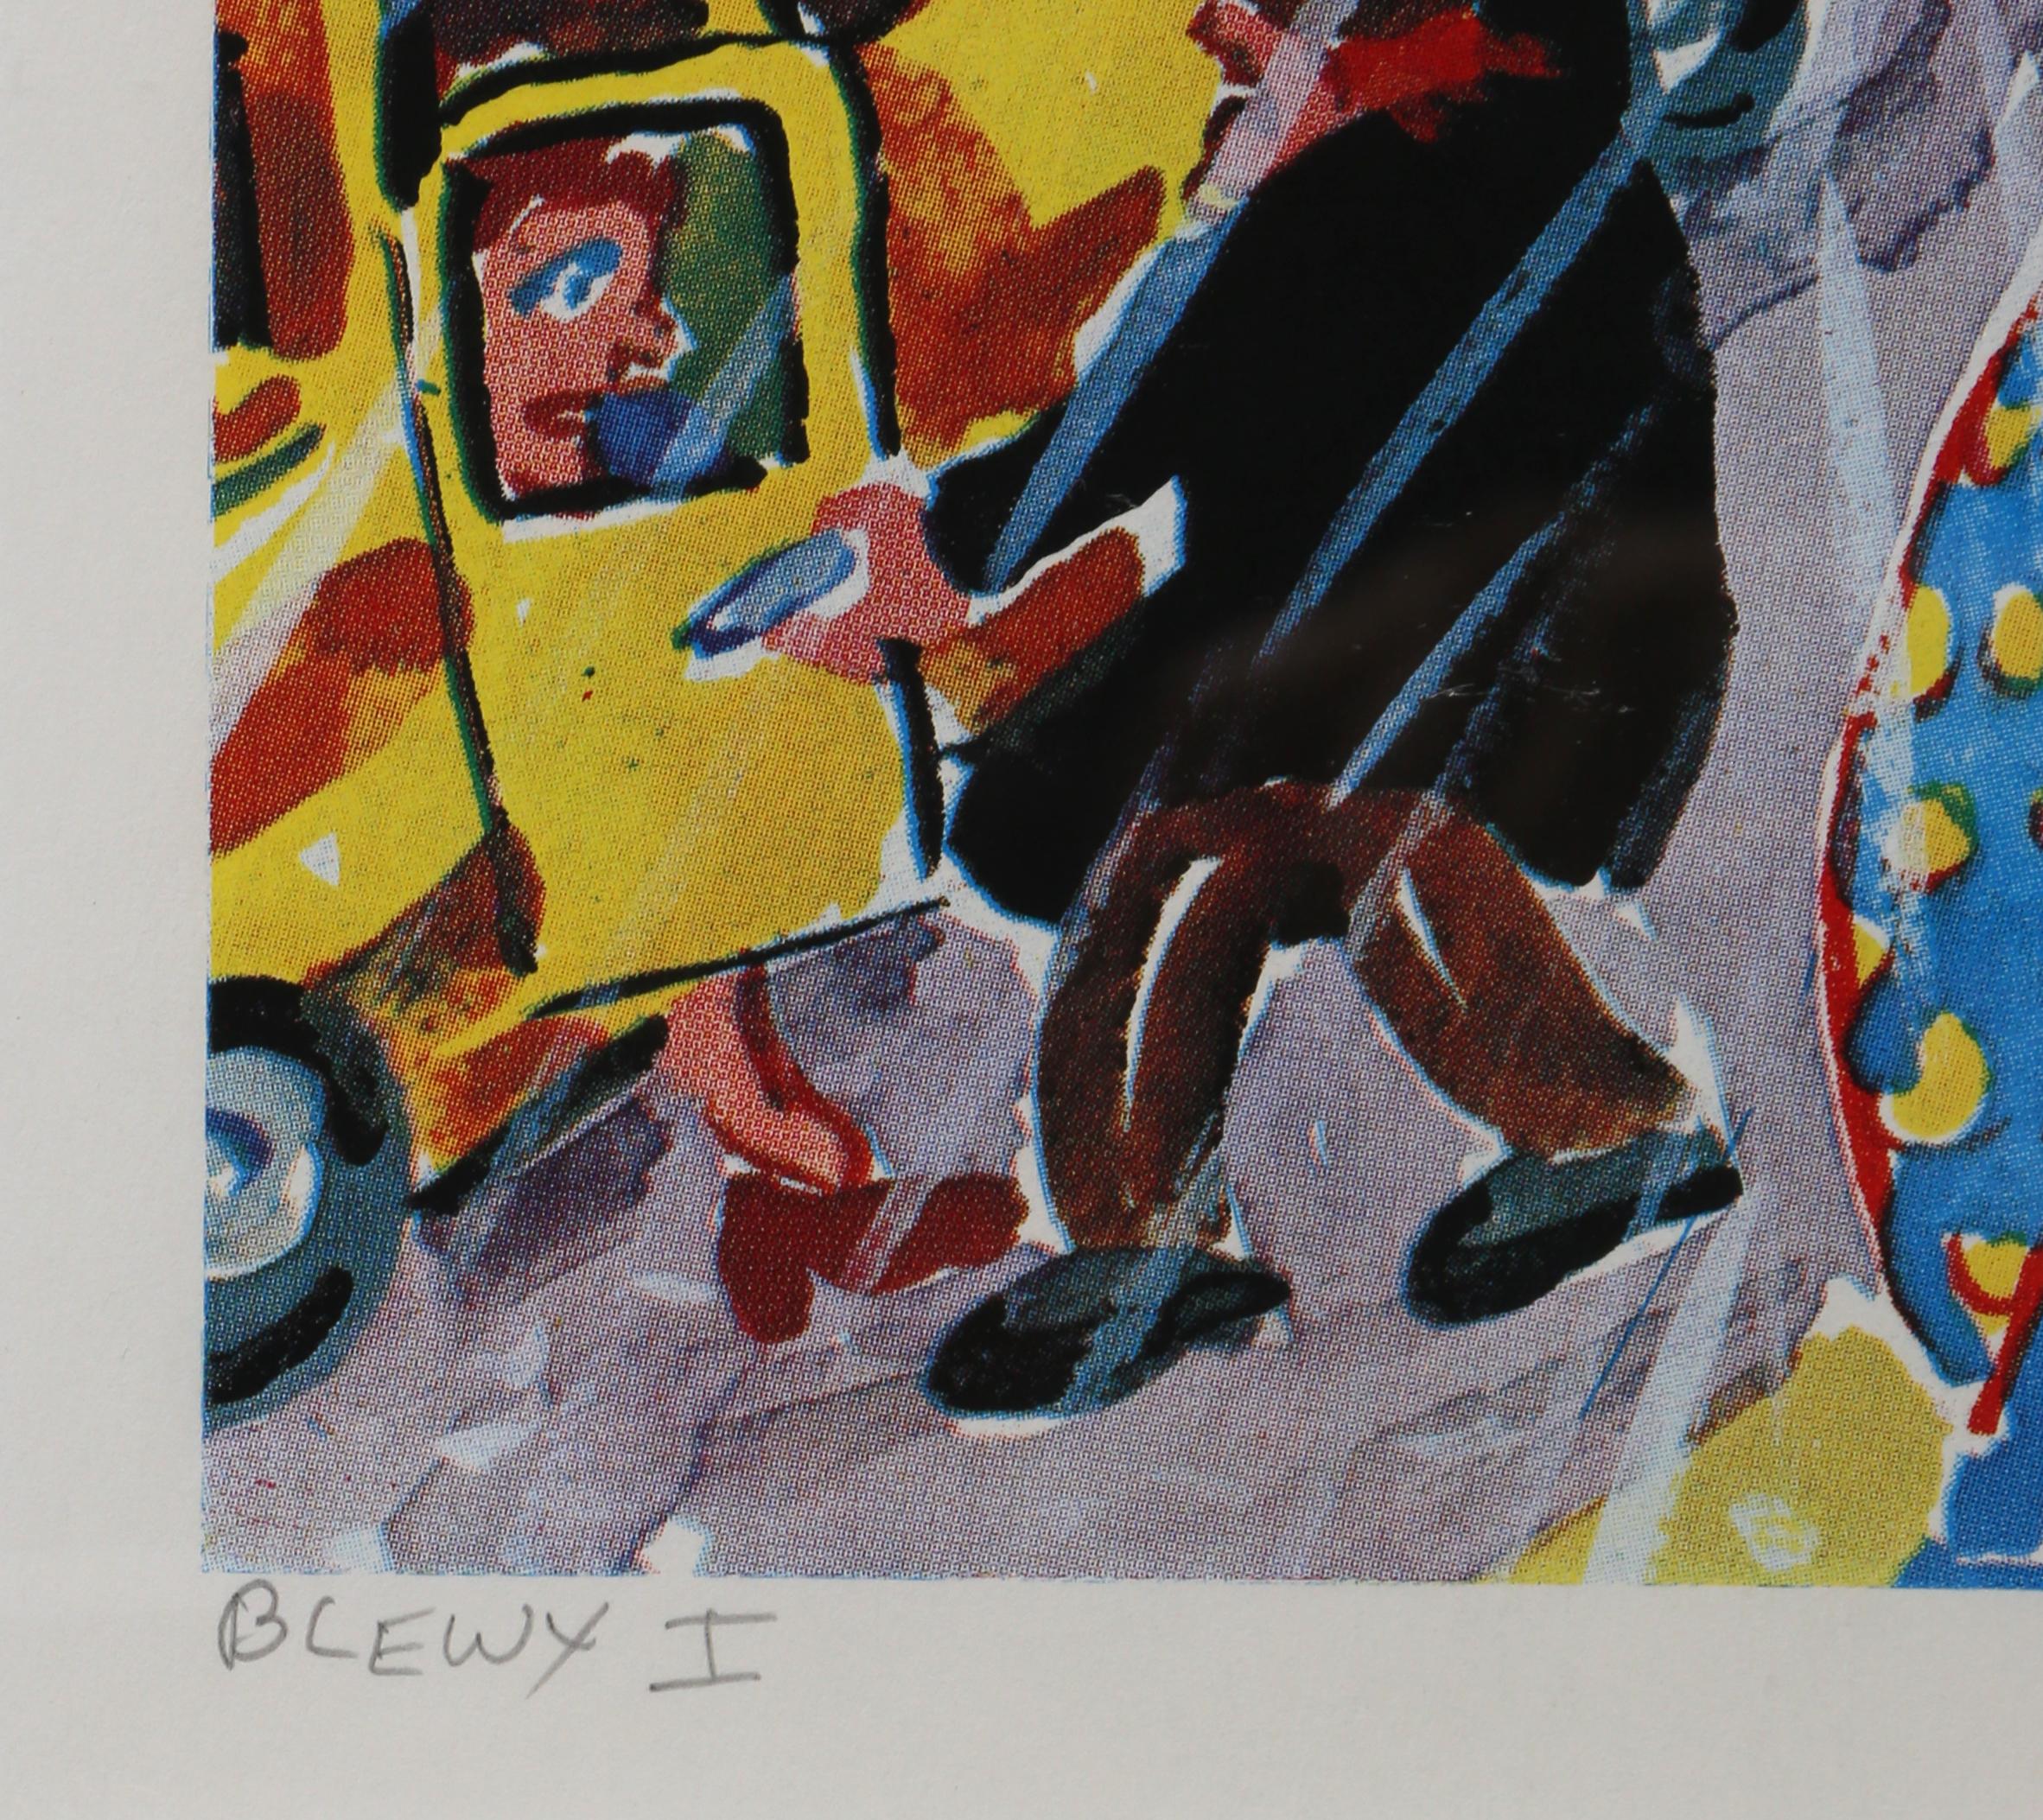 Blewy I, Pop Art Print by Red Grooms 1